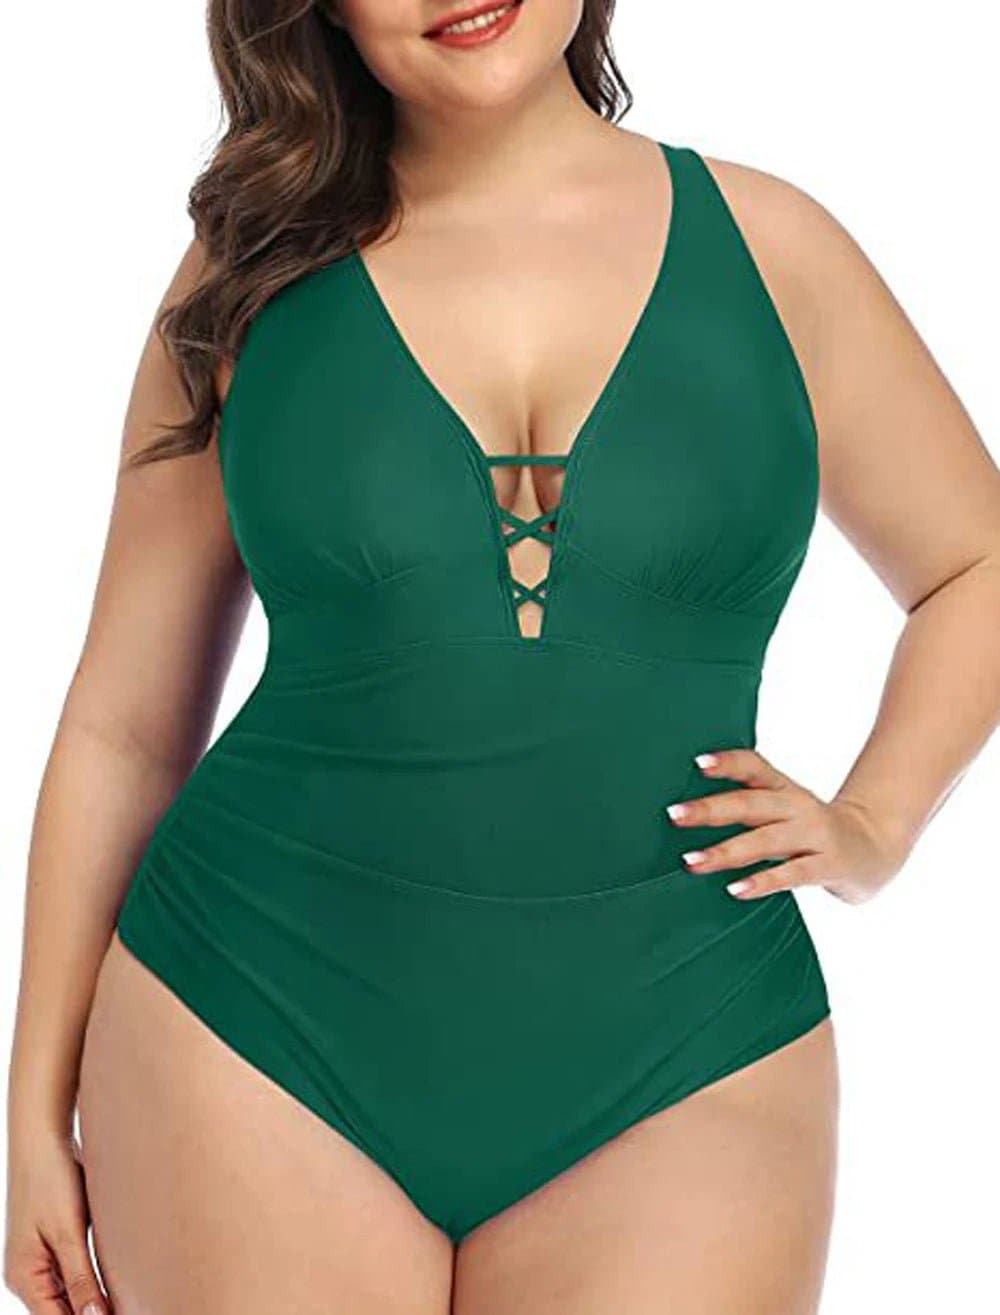 One-Piece Bathing Suits - Polyester/Spandex - Fits True to Size - Women's Swimwear - Wandering Woman